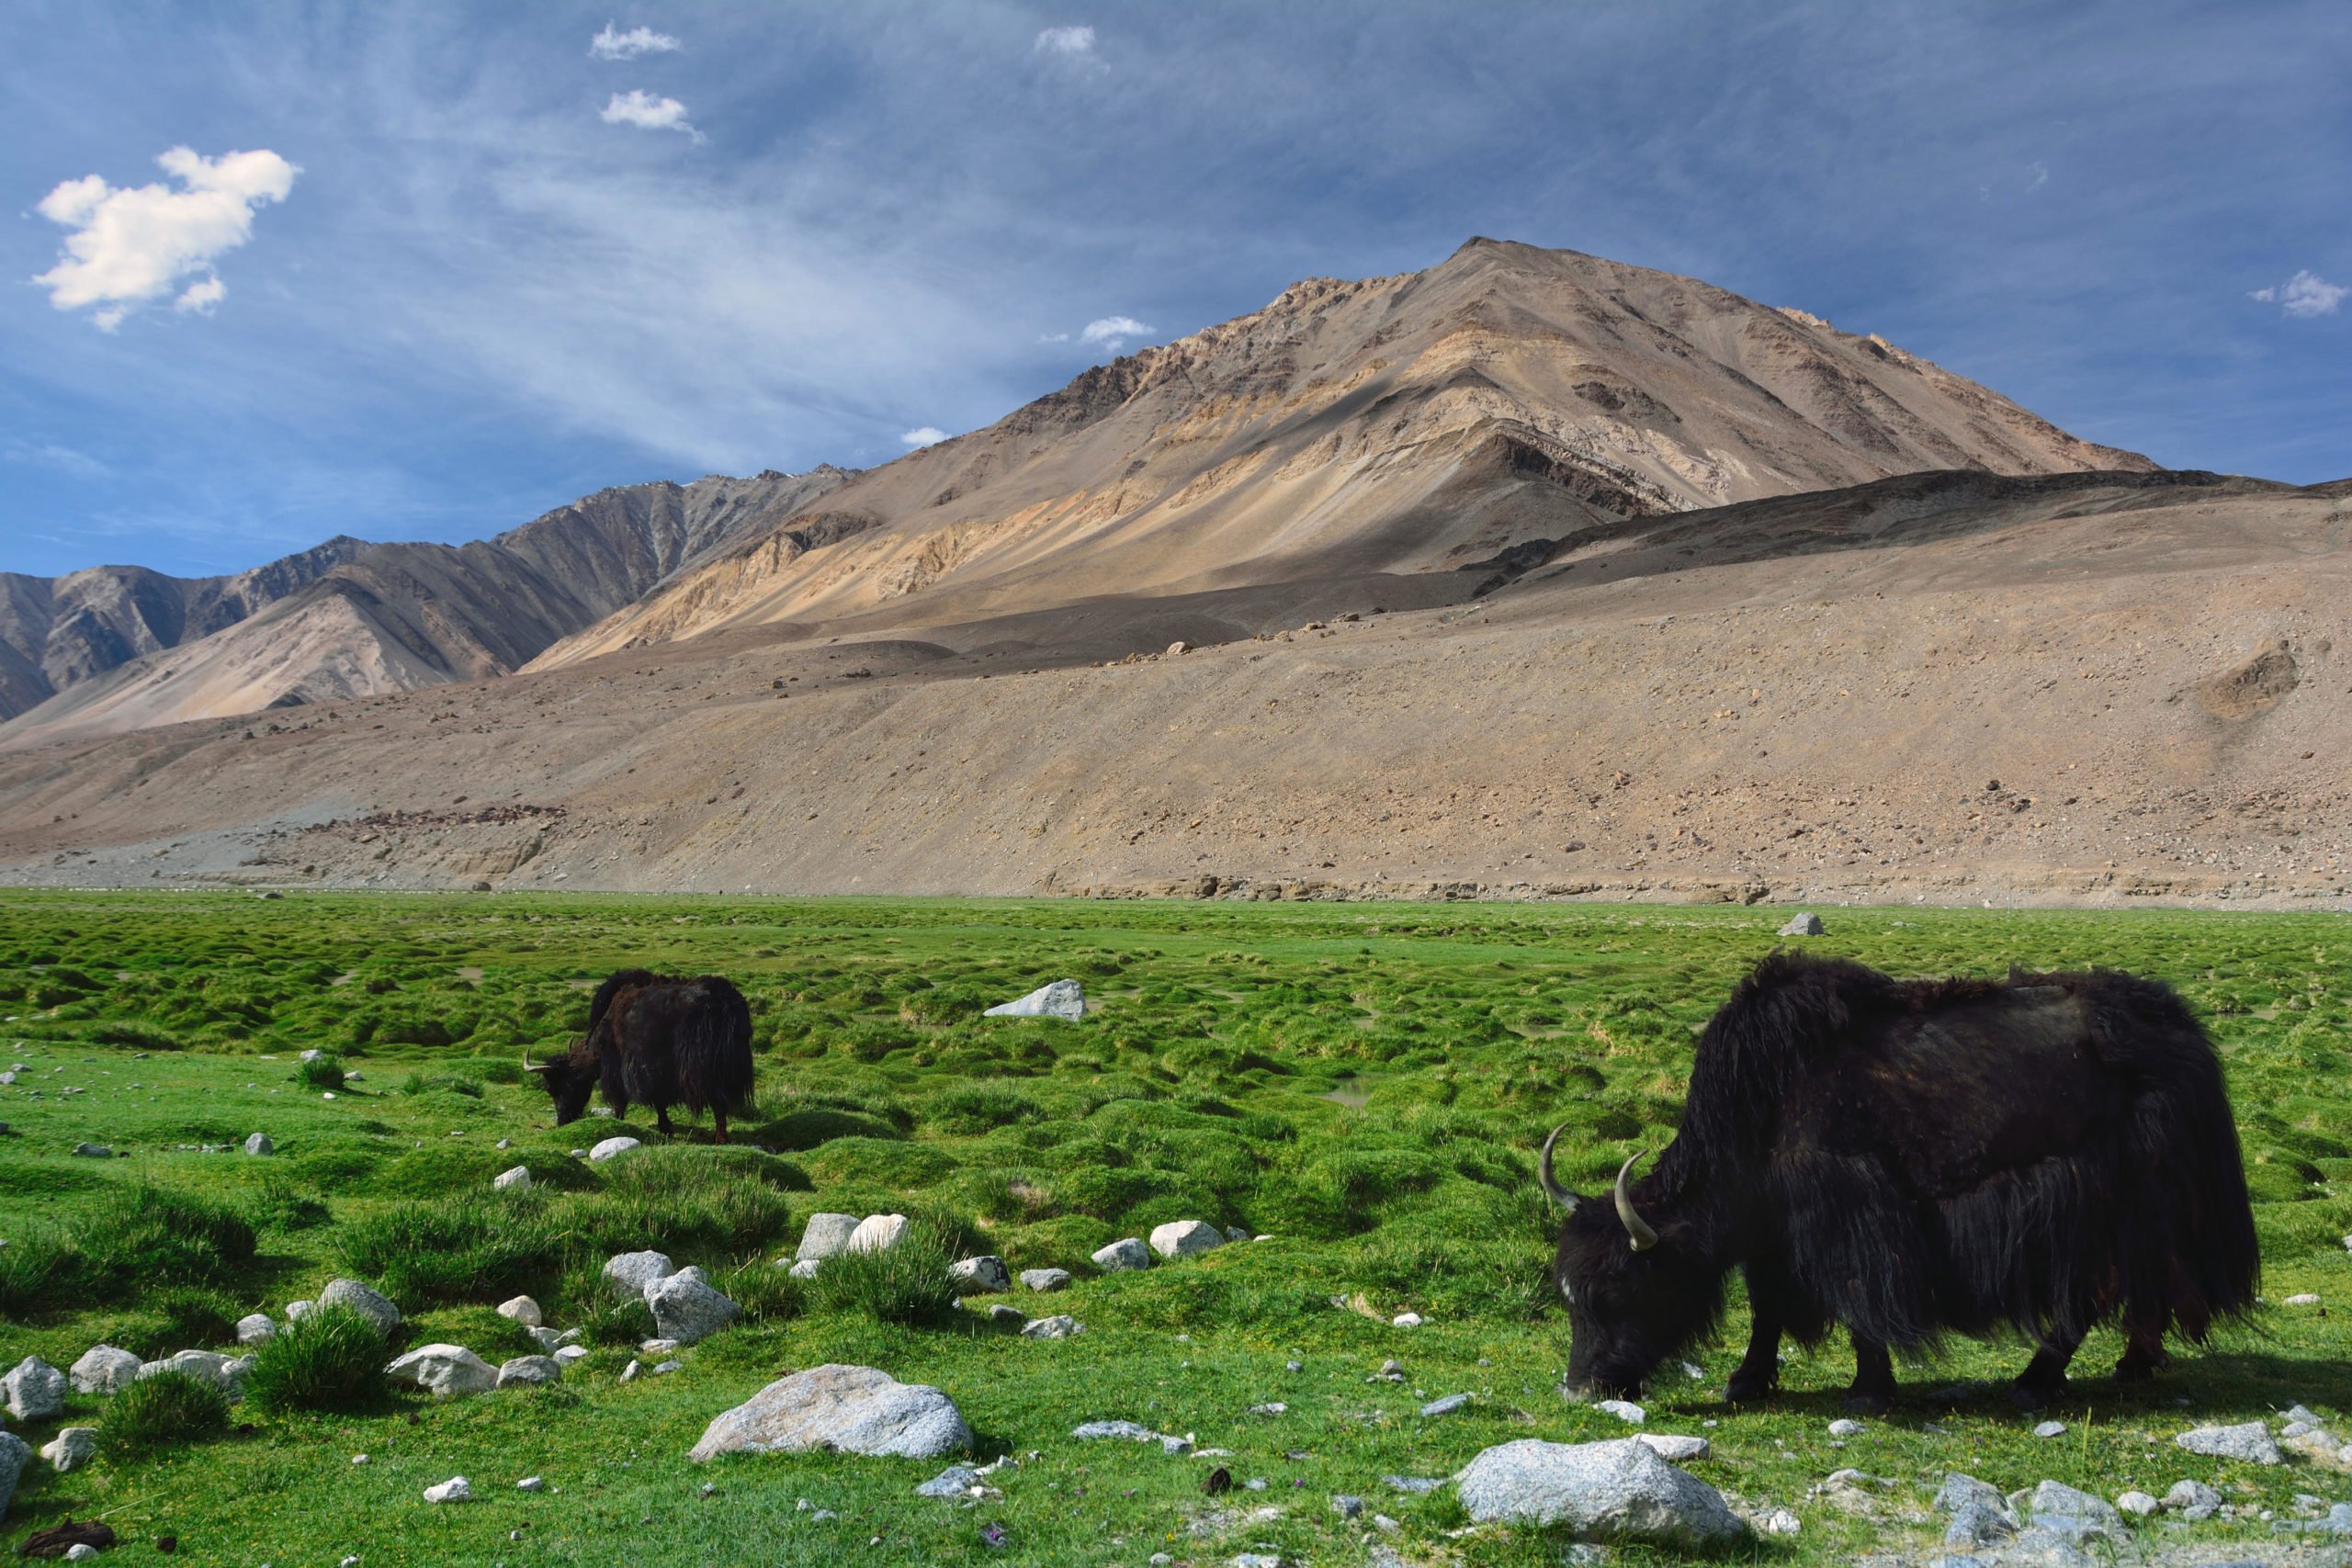 <p>Tibetan yaks graze on high mountain pasture in northern India. Regenerative farming focuses on moving animals through land to mimic traditional grazing patterns. (Image: Ilona Kryzhanivska / Alamy)</p>